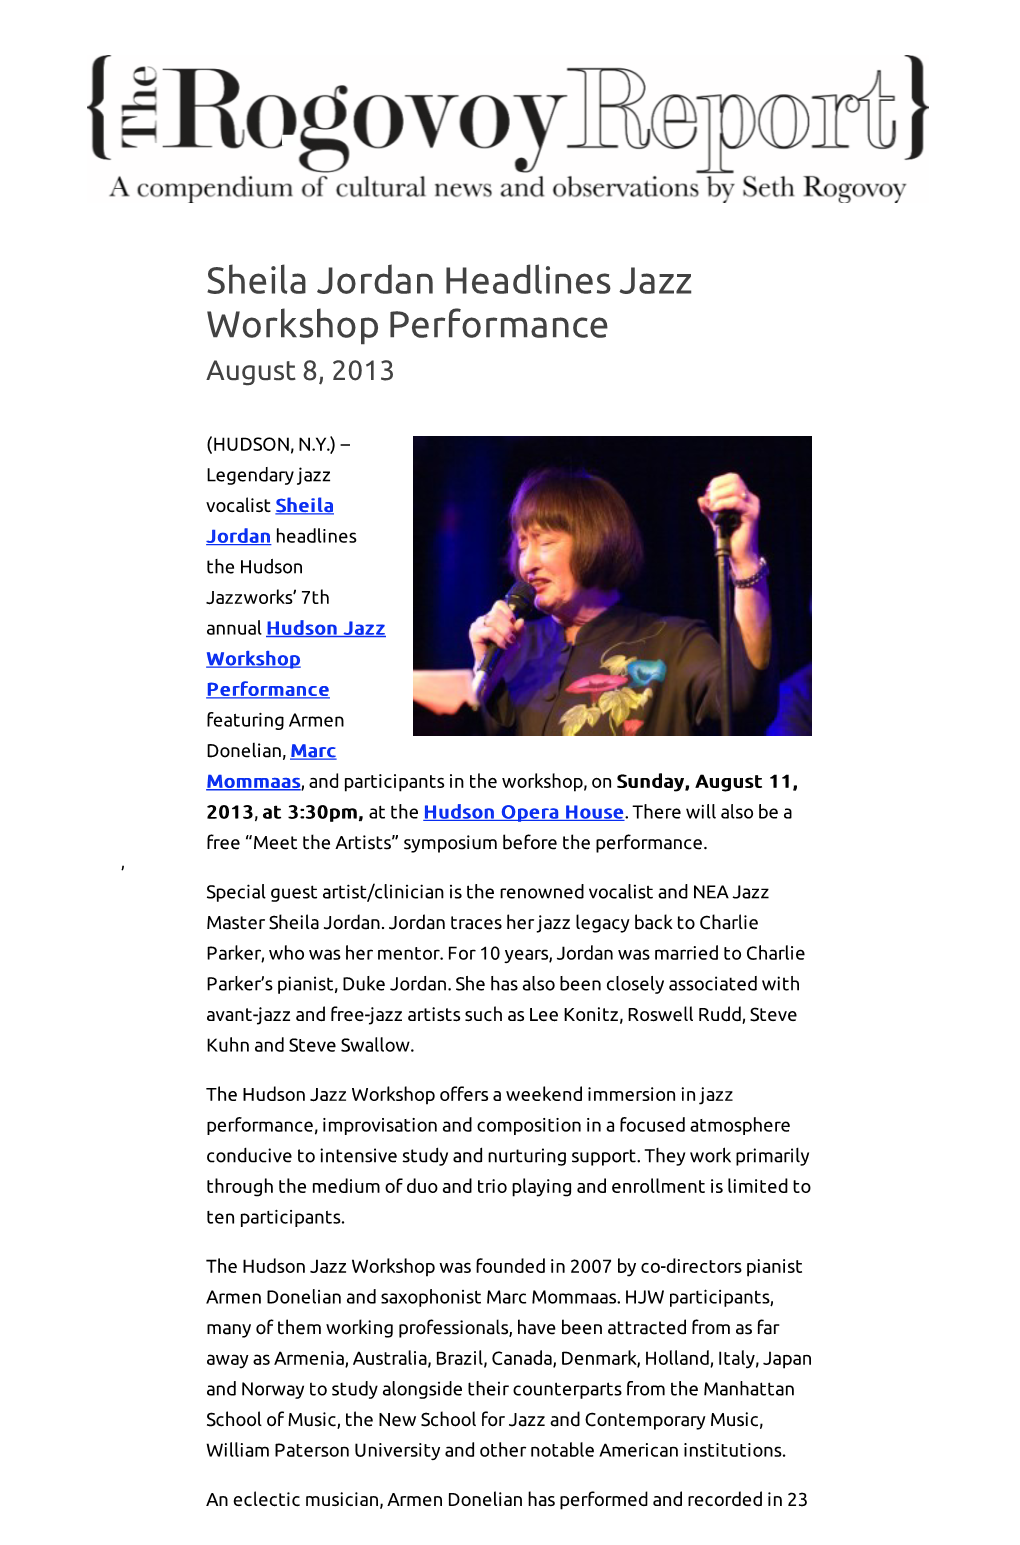 Sheila Jordan Headlines Jazz Workshop Performance | the Rogovoy Report 8/12/13 11:29 AM